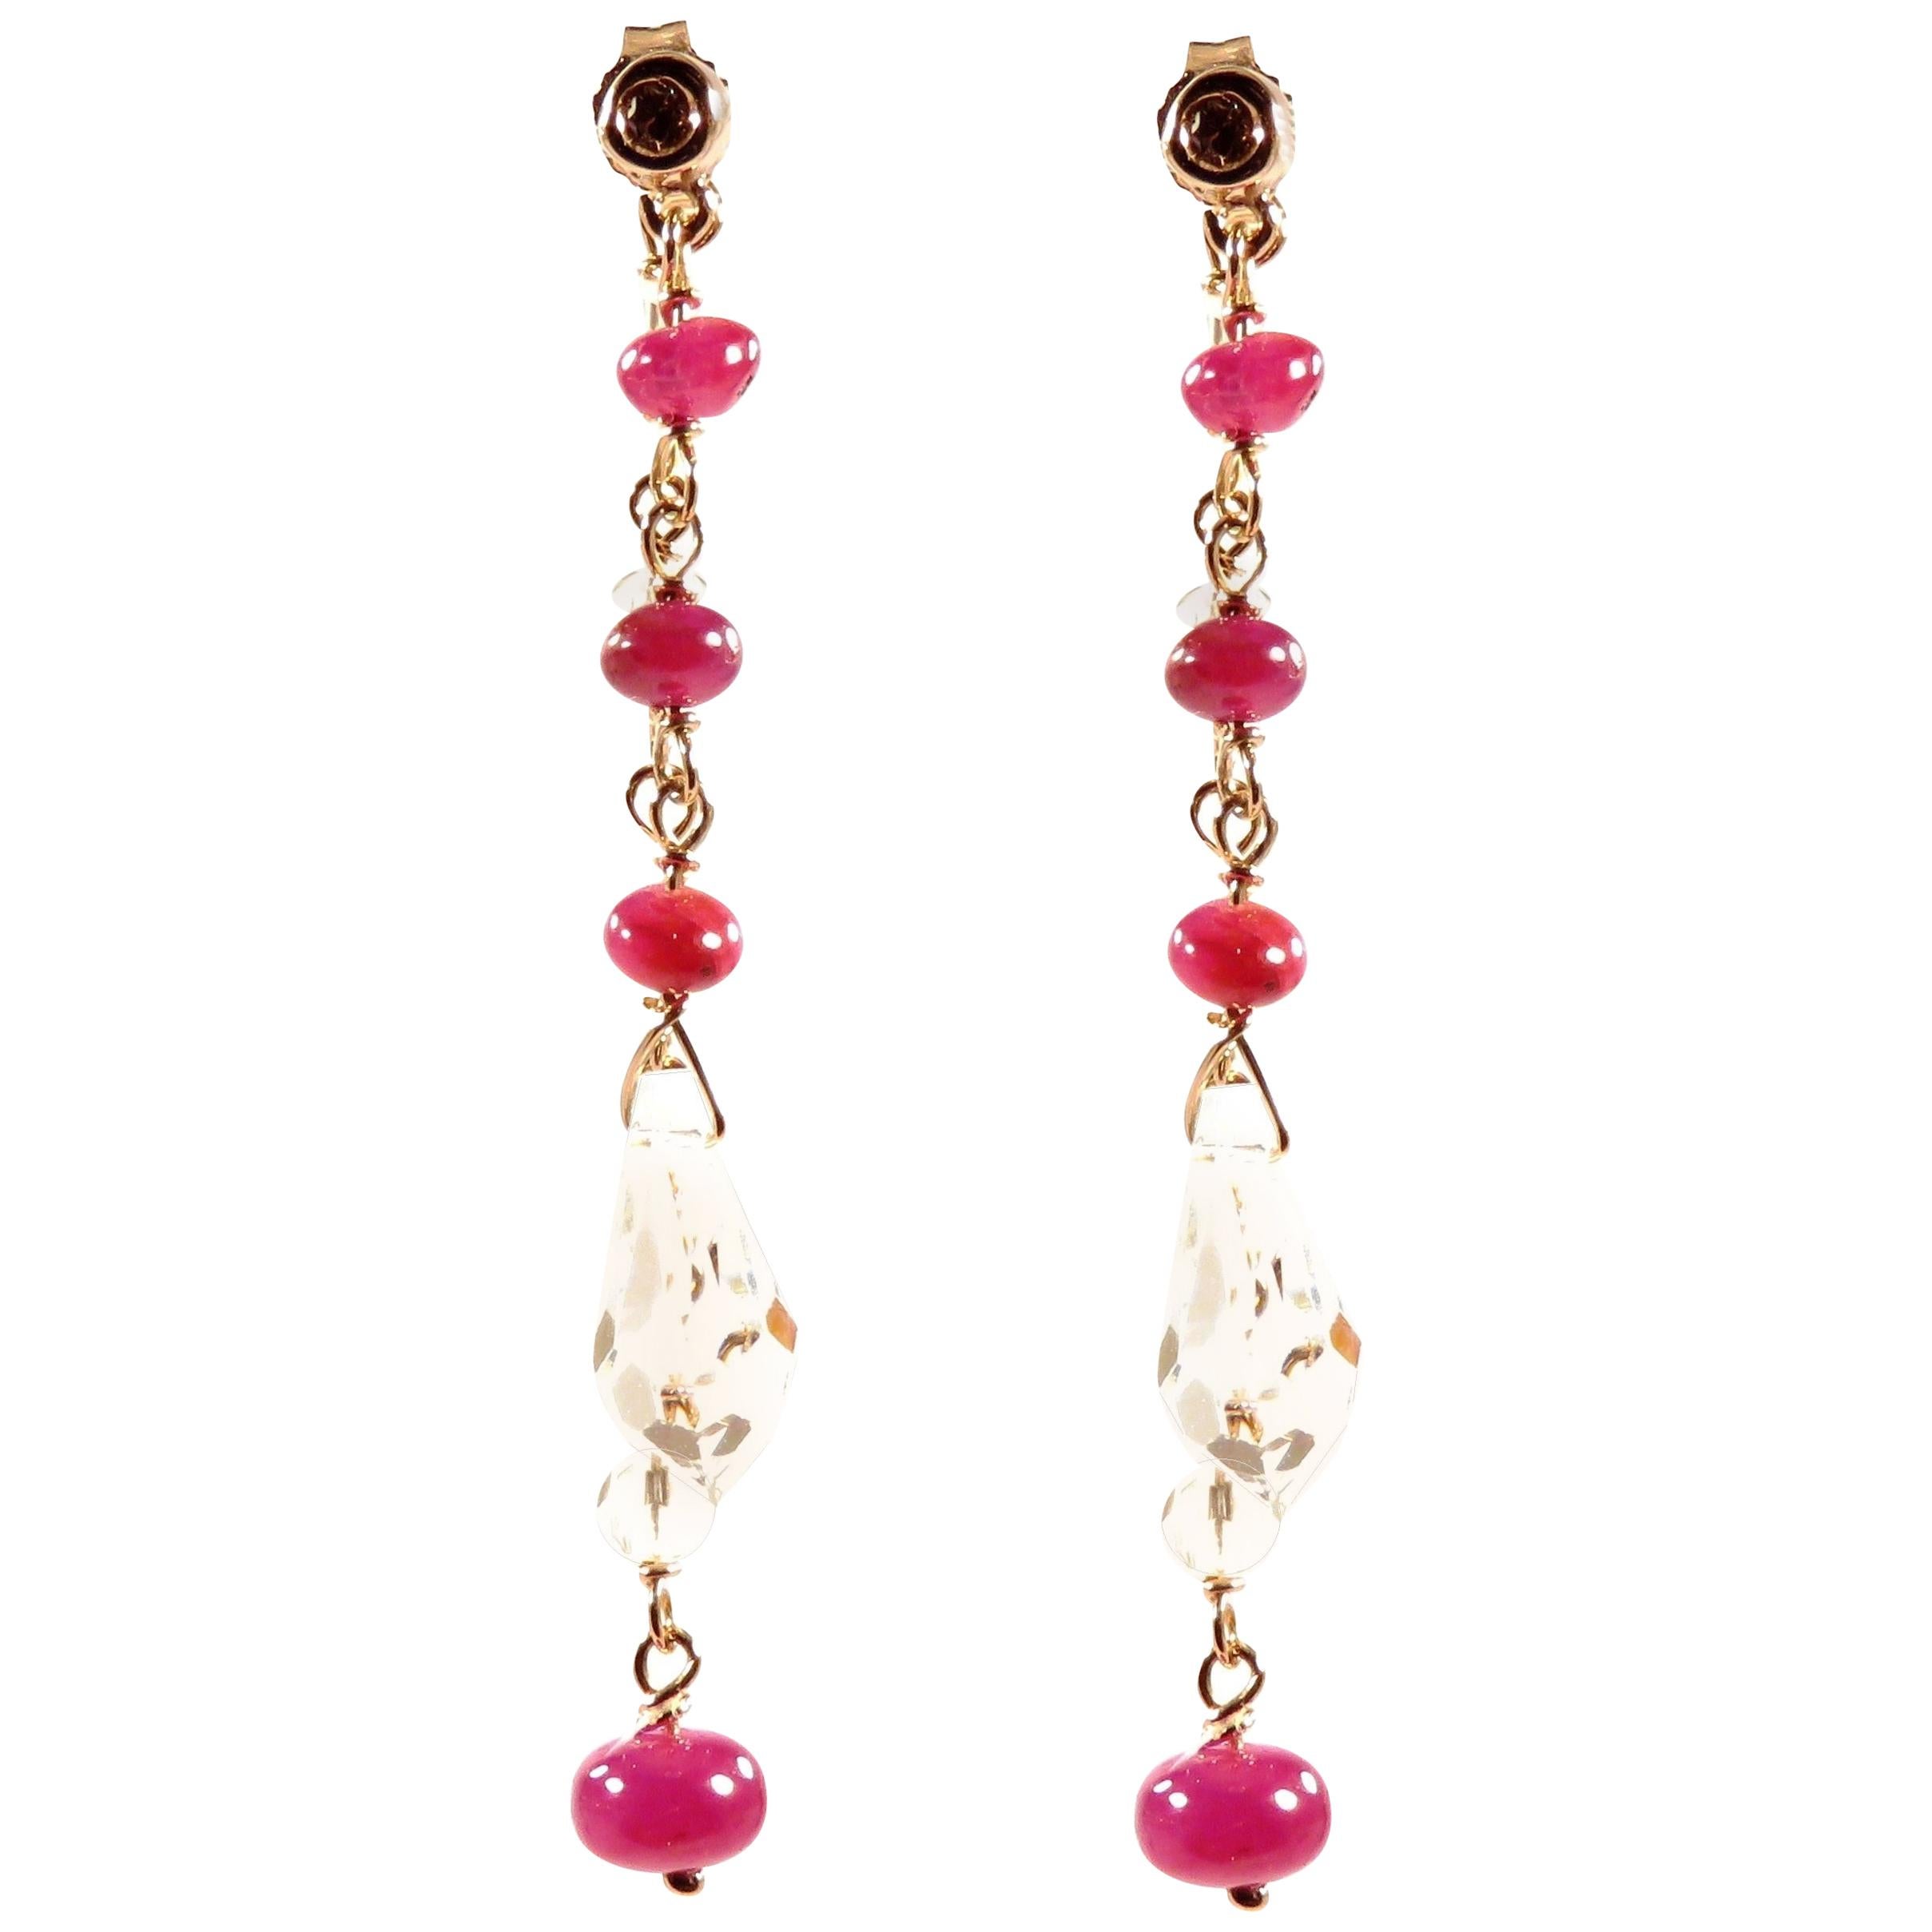 Brown Diamonds Rubies Rock Crystal Rose Gold Earrings Handcrafted in Italy